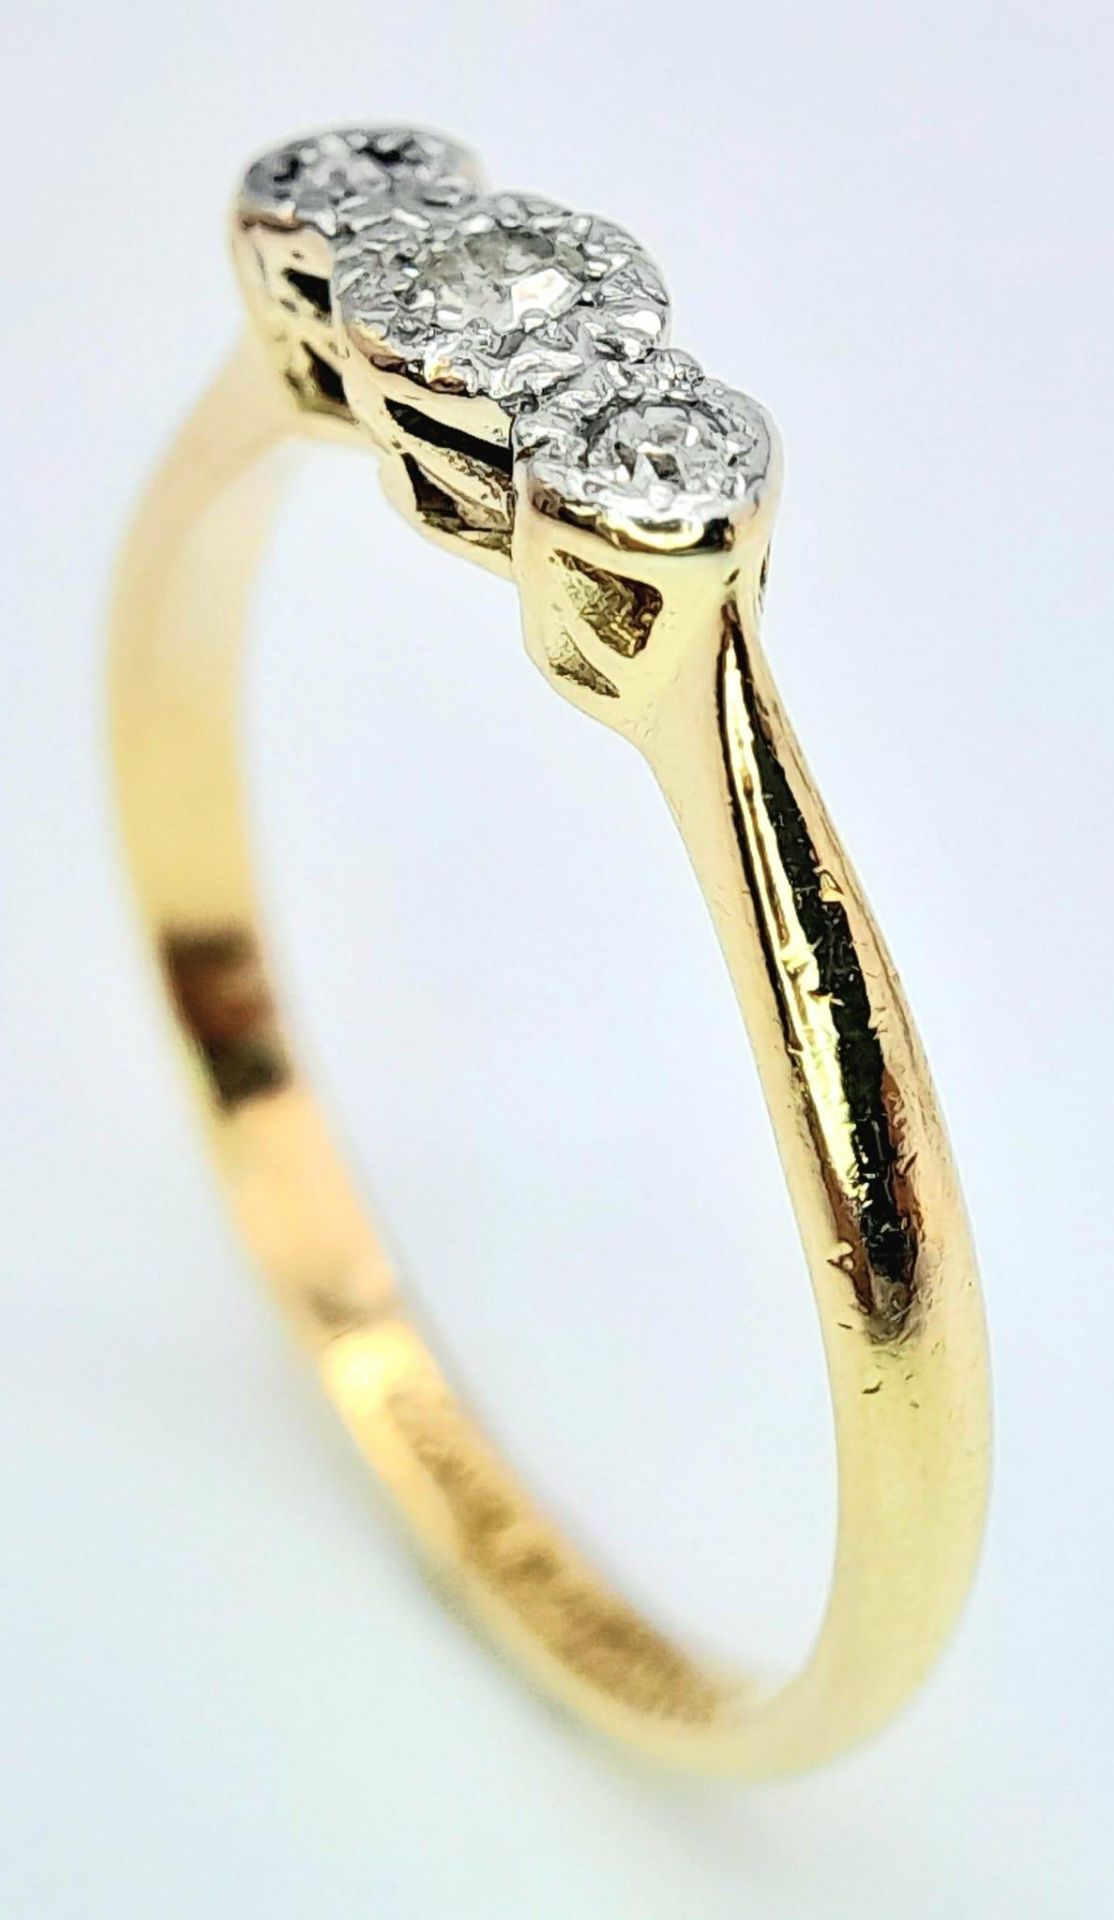 AN 18K YELLOW GOLD & PLATINUM VINTAGE 3 STONE DIAMOND RING. 2.3G. SIZE P - Image 4 of 6